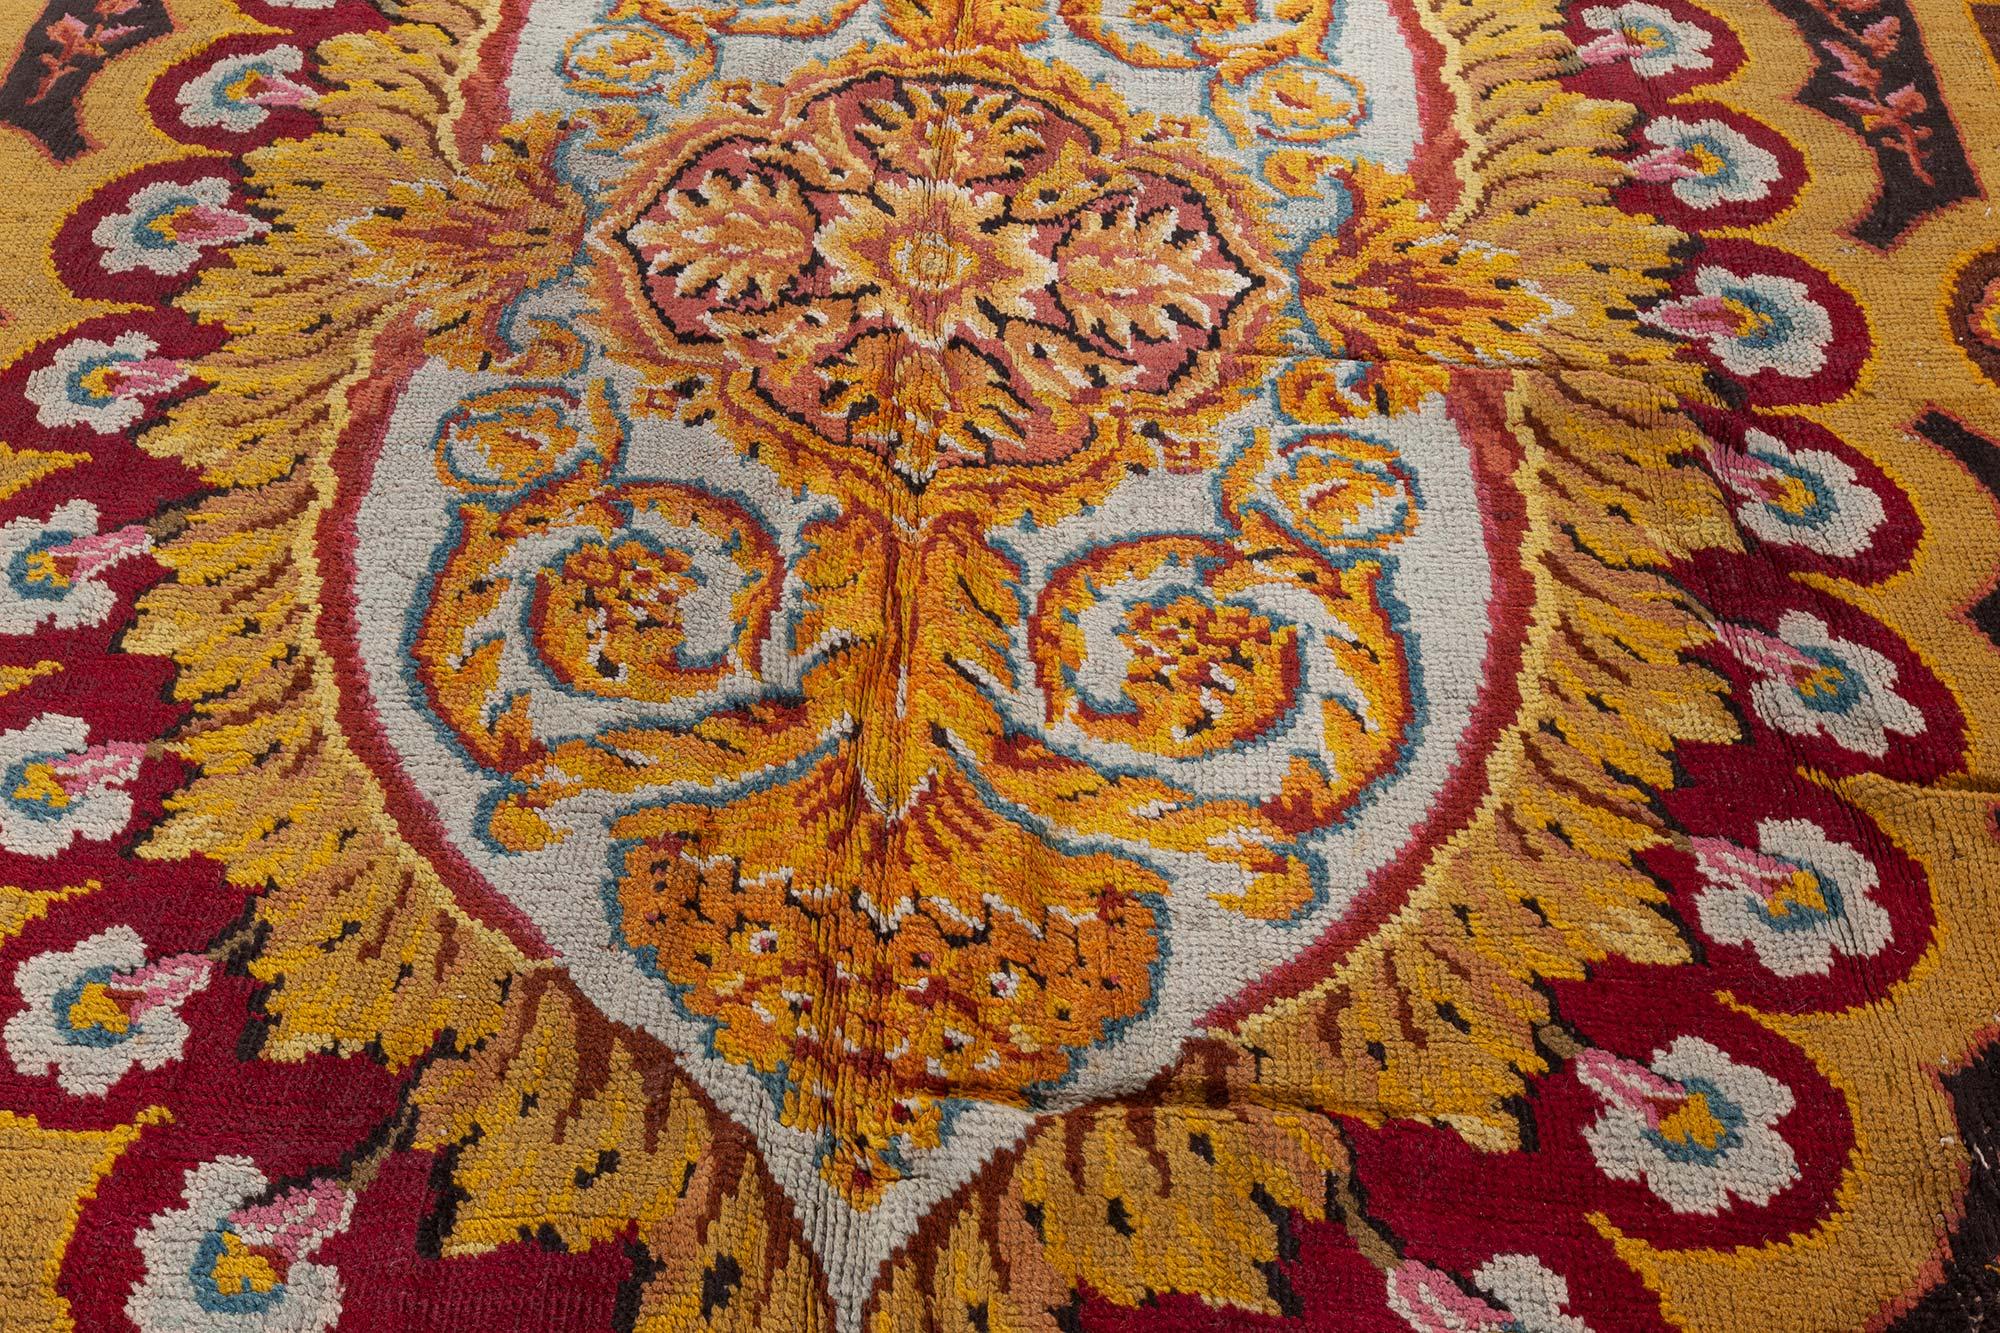 Antique Axminster botanic handmade wool carpet
Size: 14'4